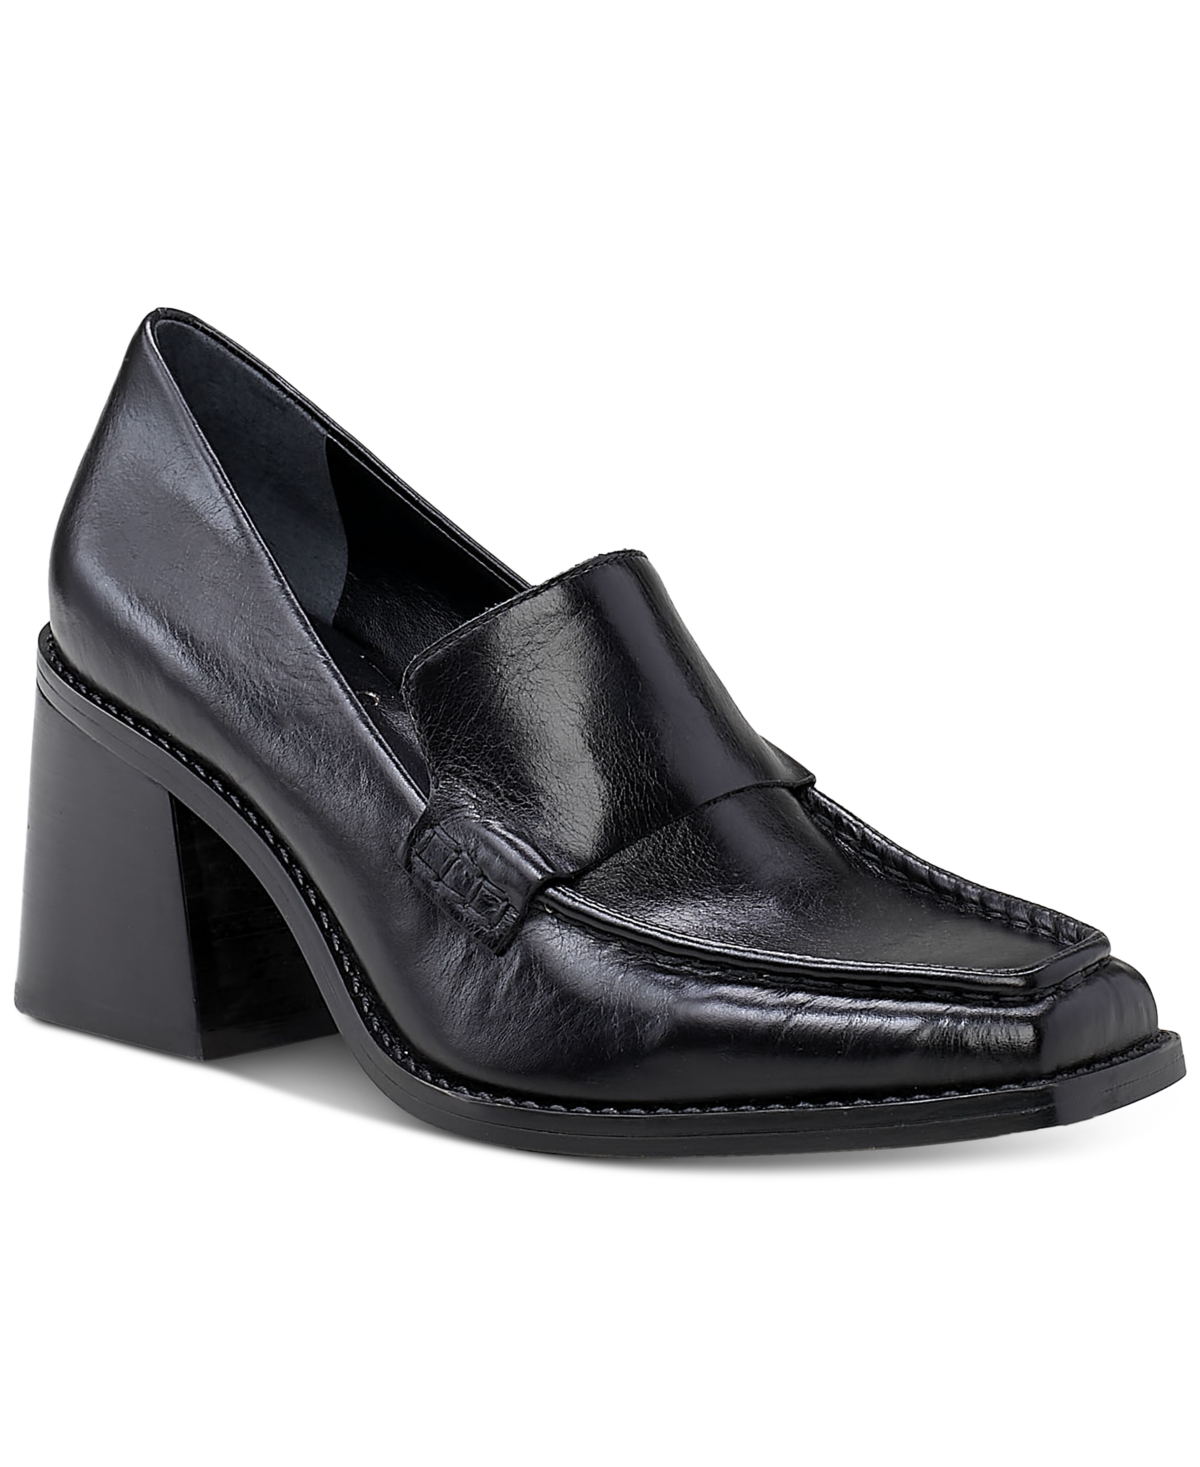 Women's Segellis Block-Heel Tailored Loafers - Black